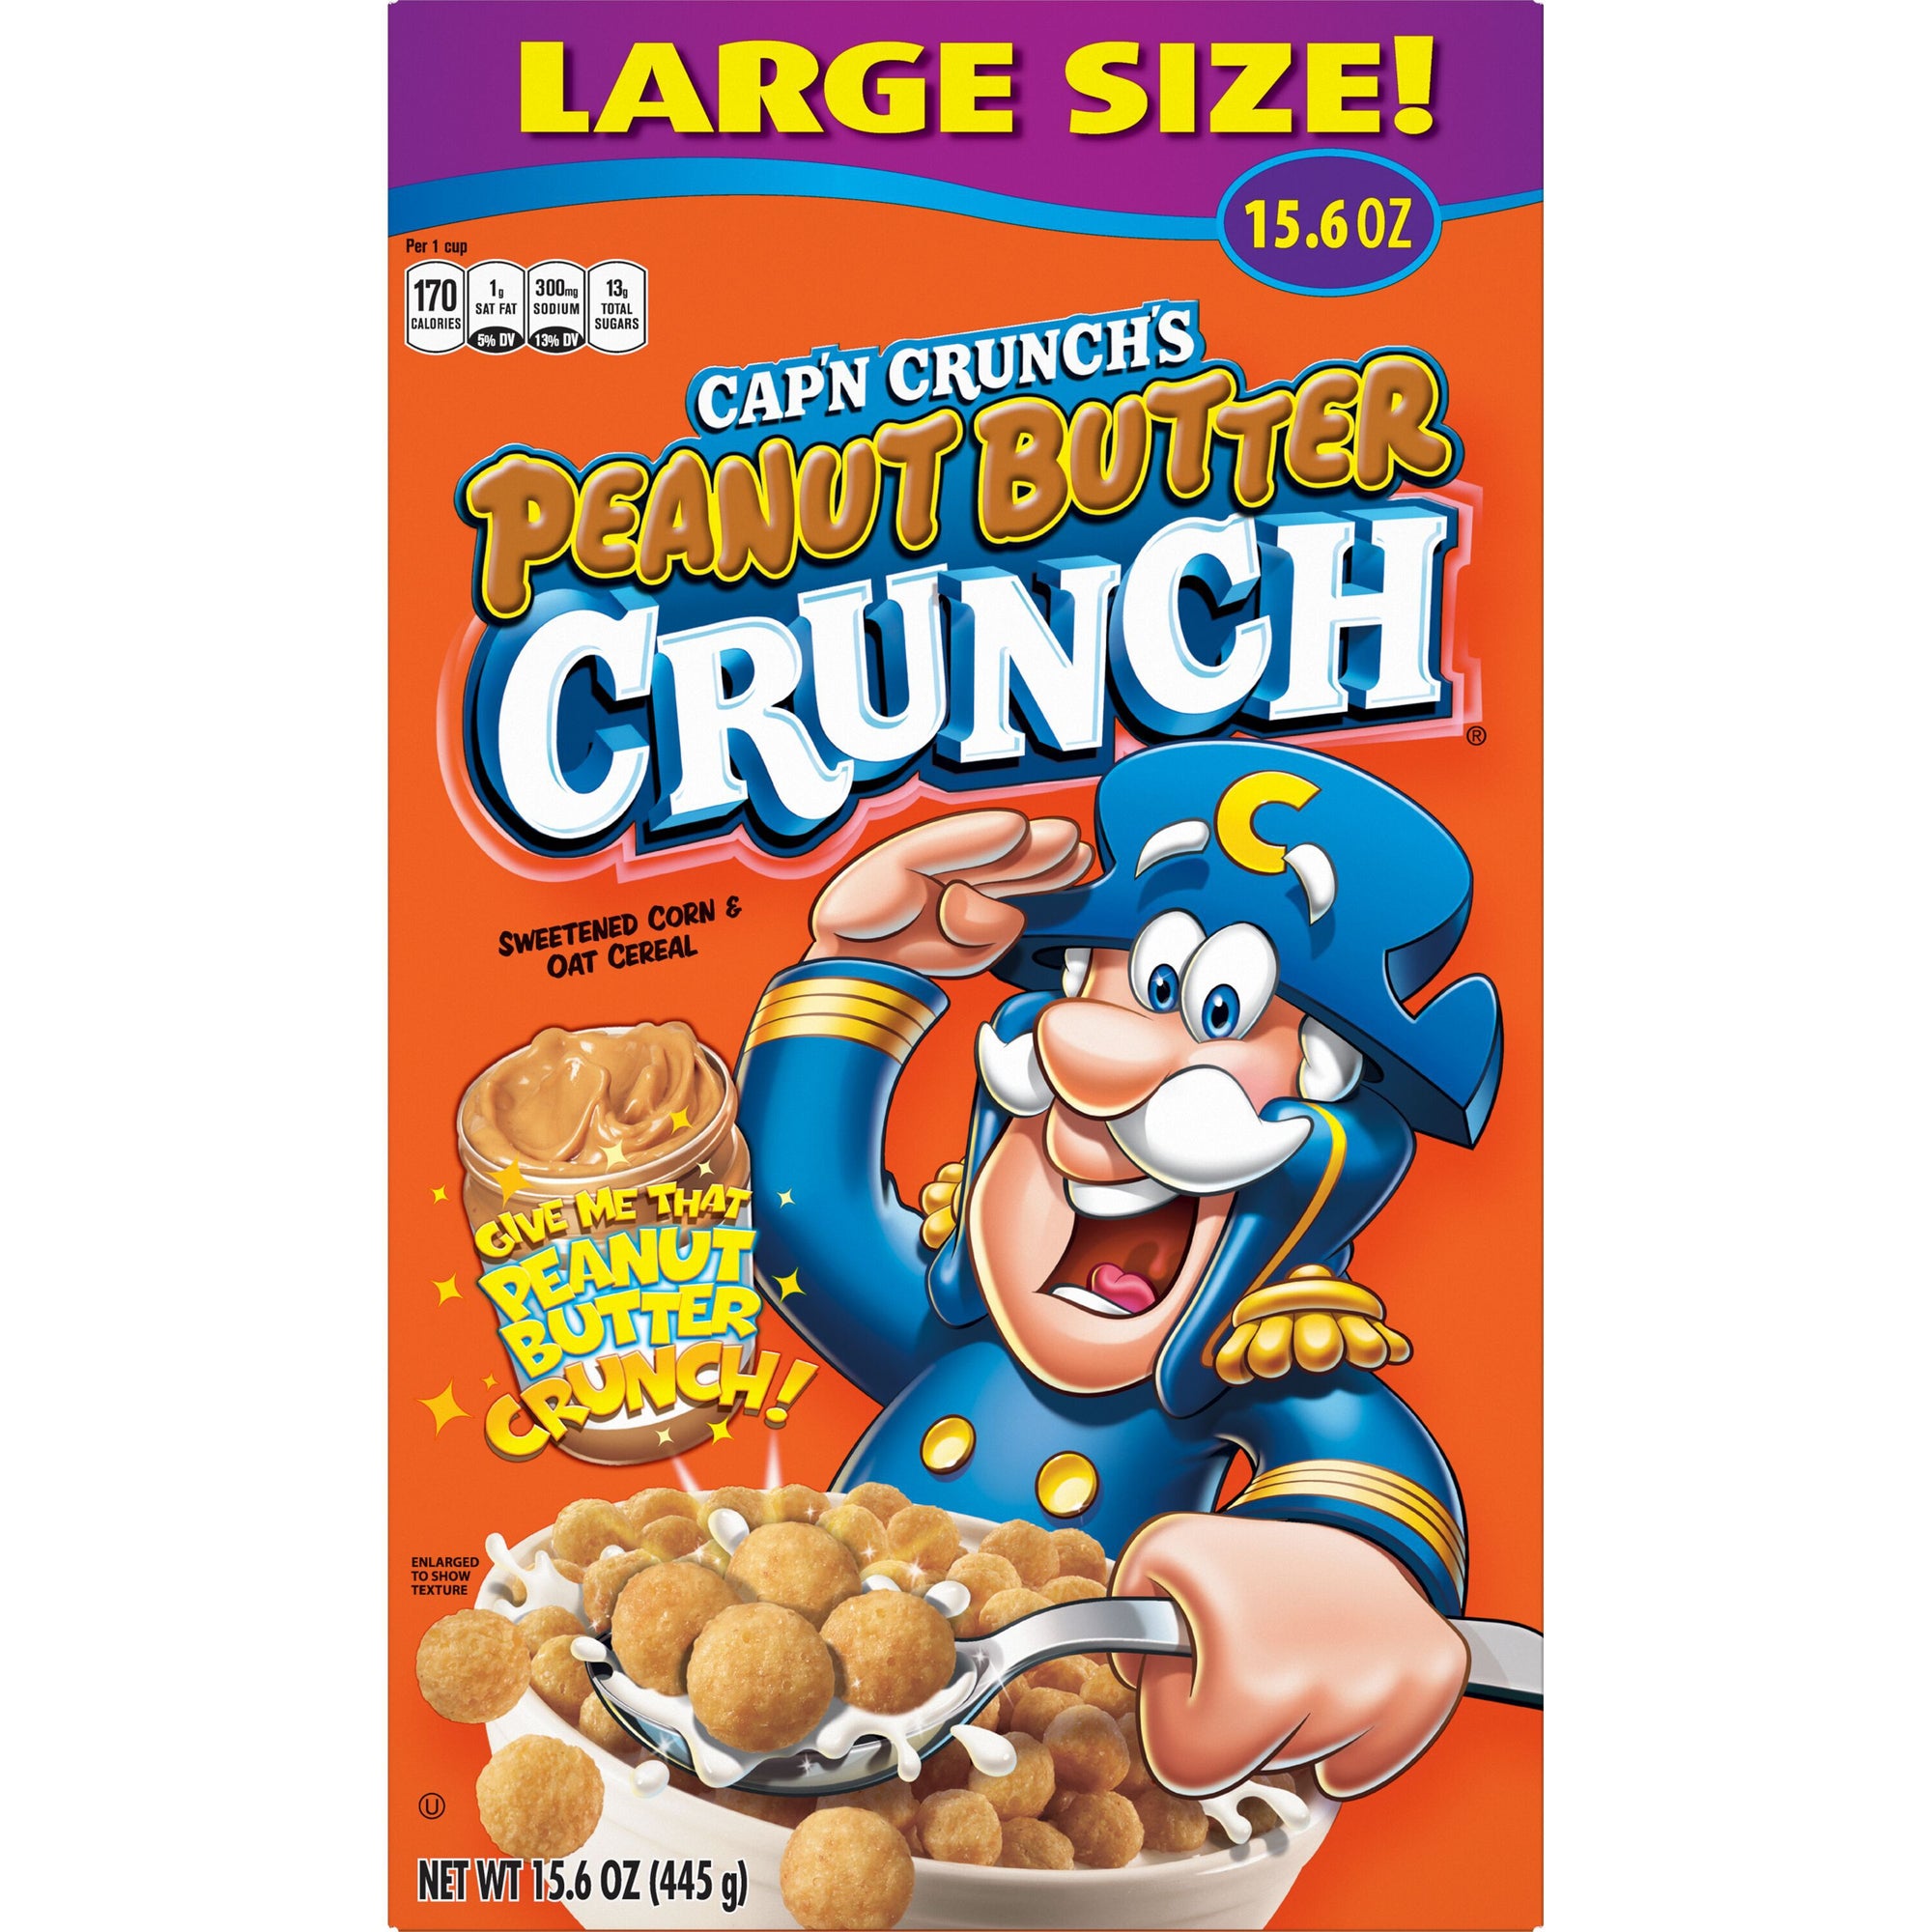 Cap'n Crunch Peanut Butter Crunch Cereal 15.6oz